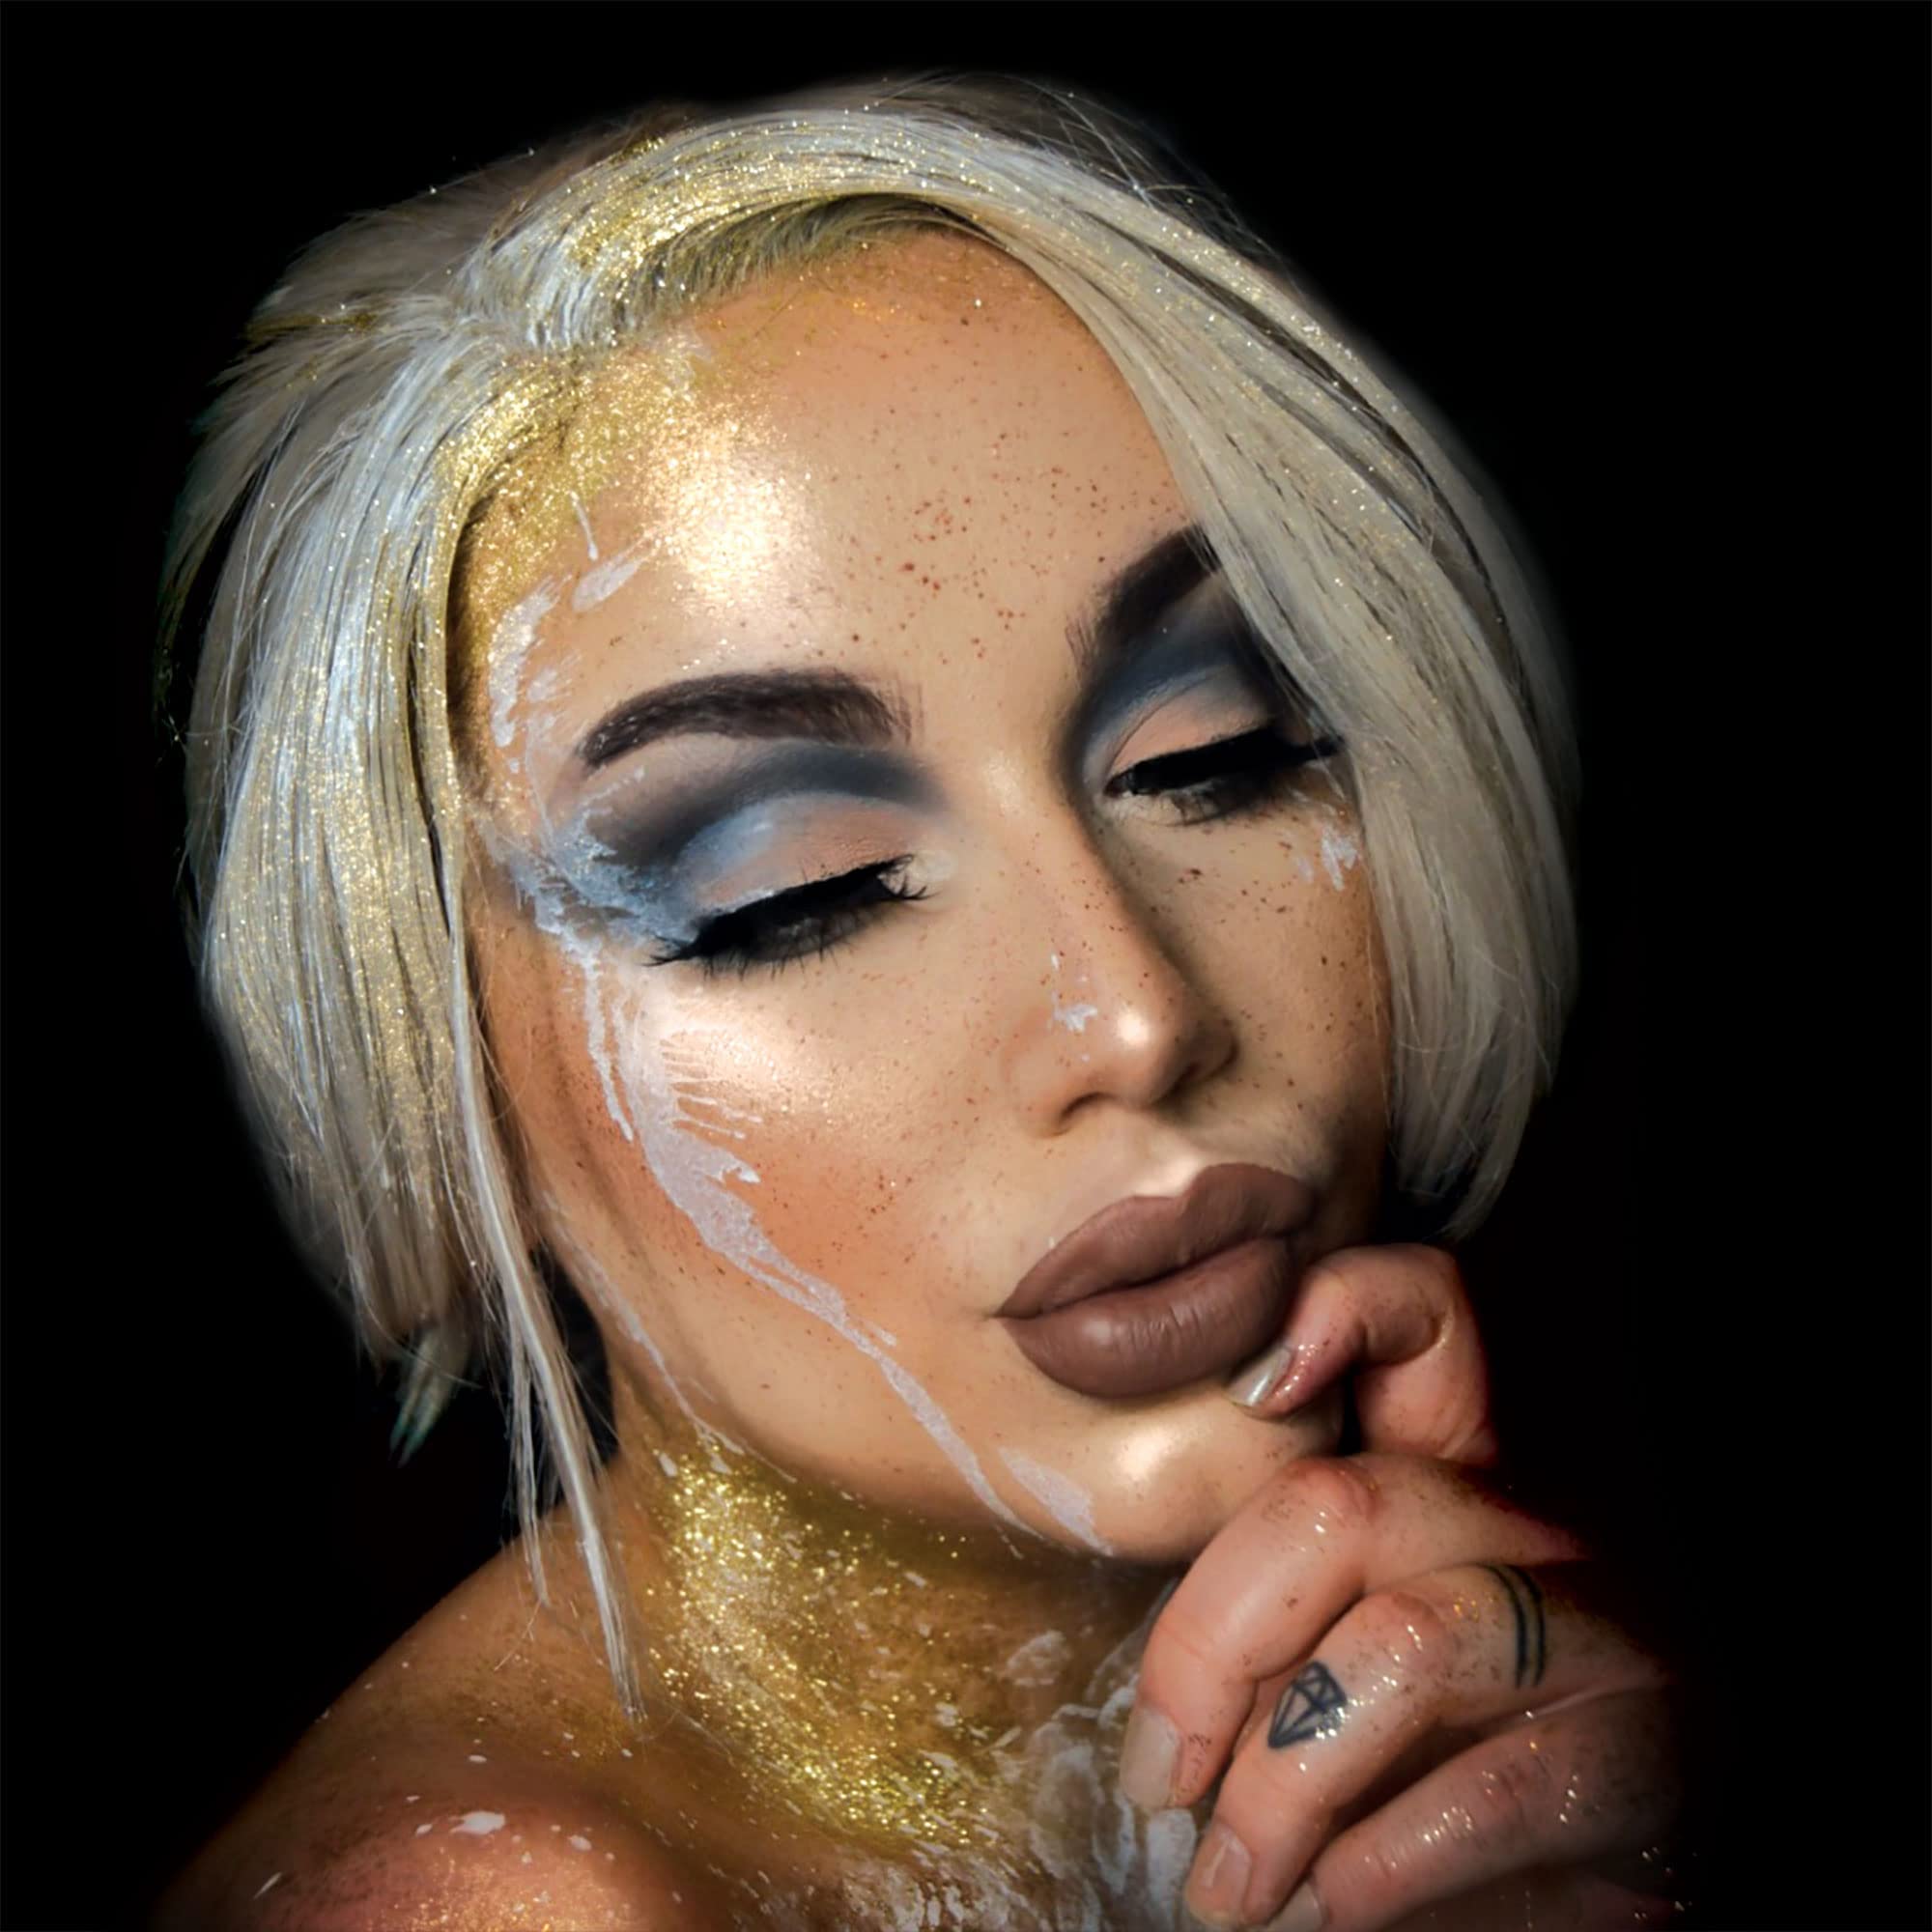 Mehron Makeup Hair and Body GlitterSpray (1 oz) (Gold)